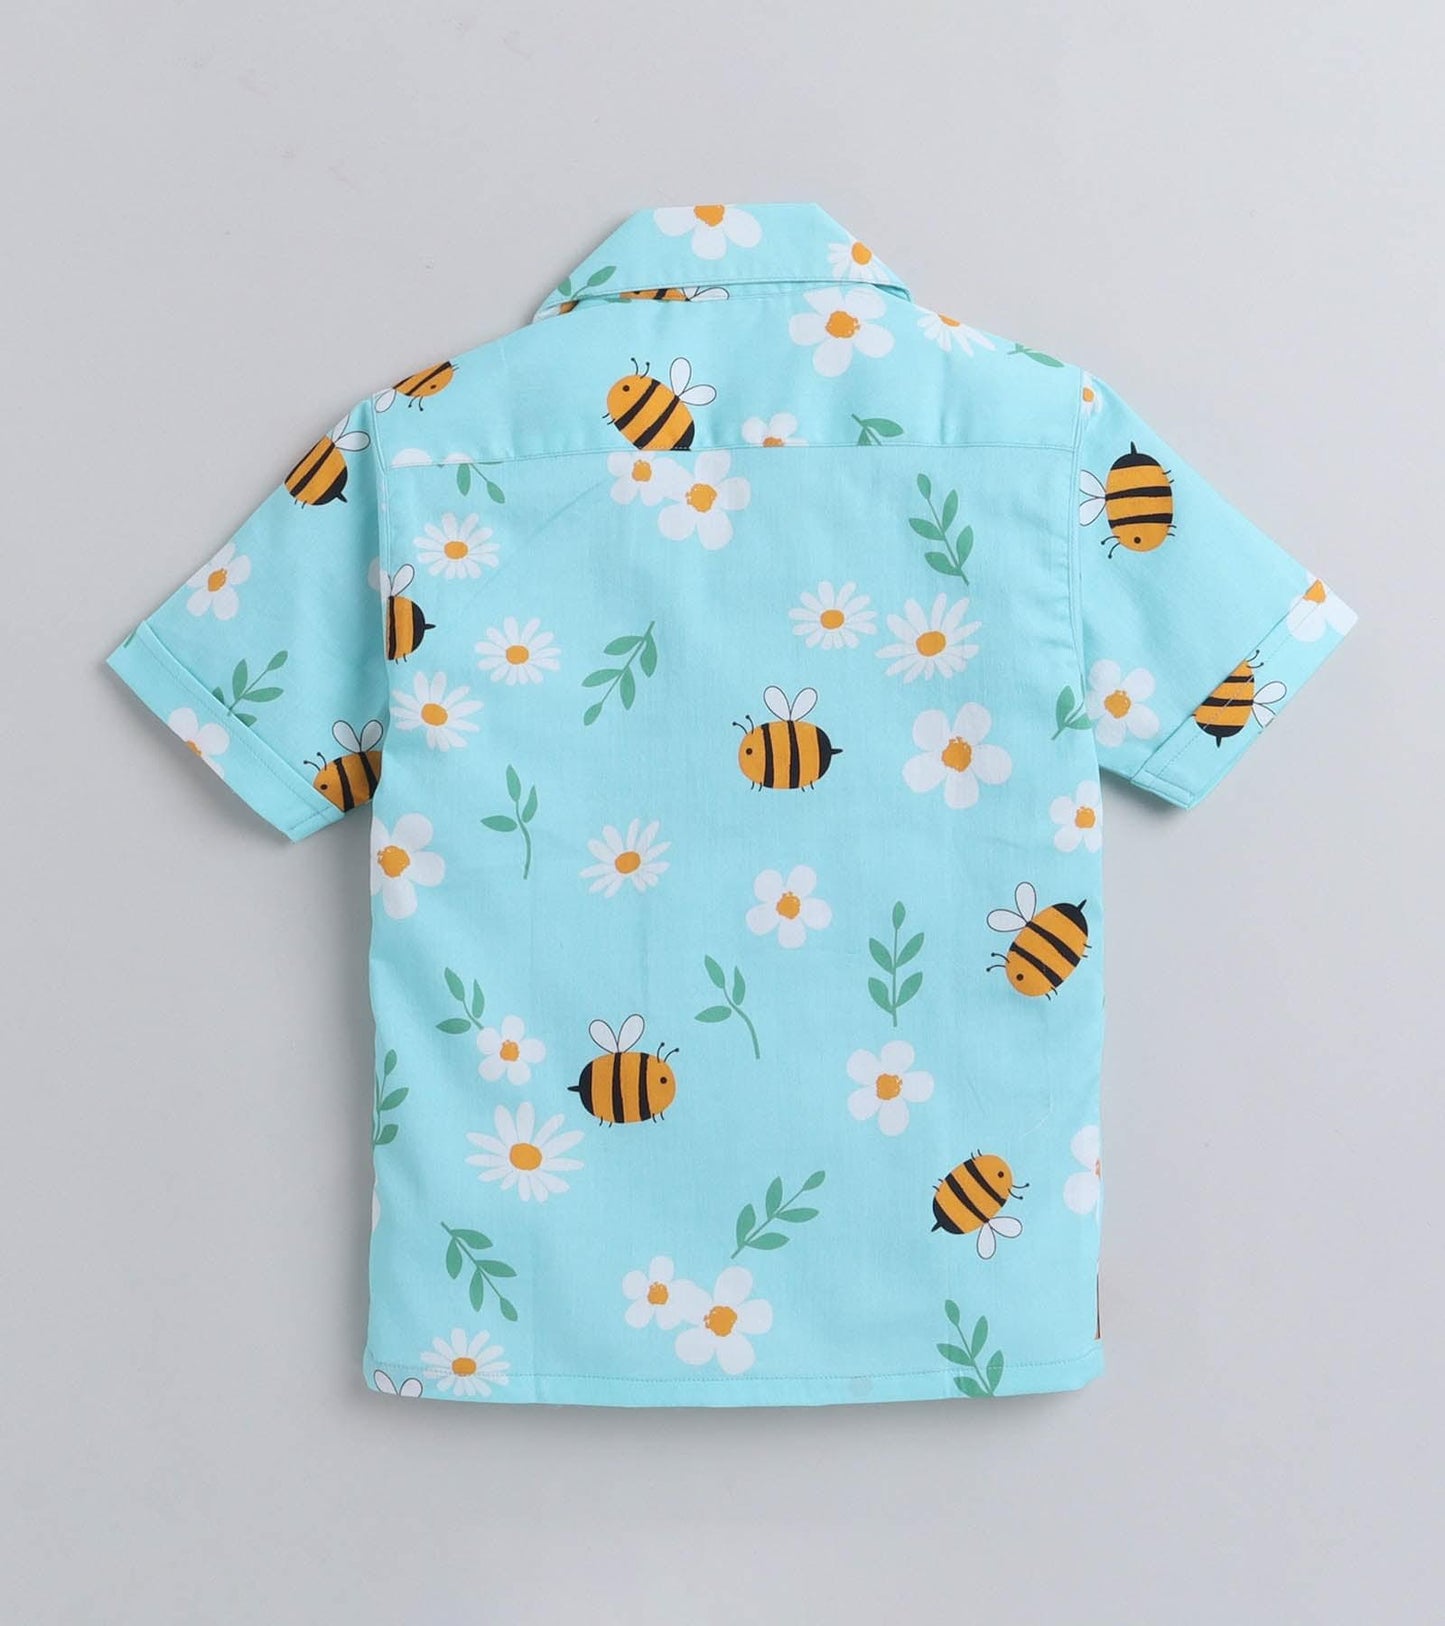 Beelious Digital printed Shirt with yellow solid Shorts